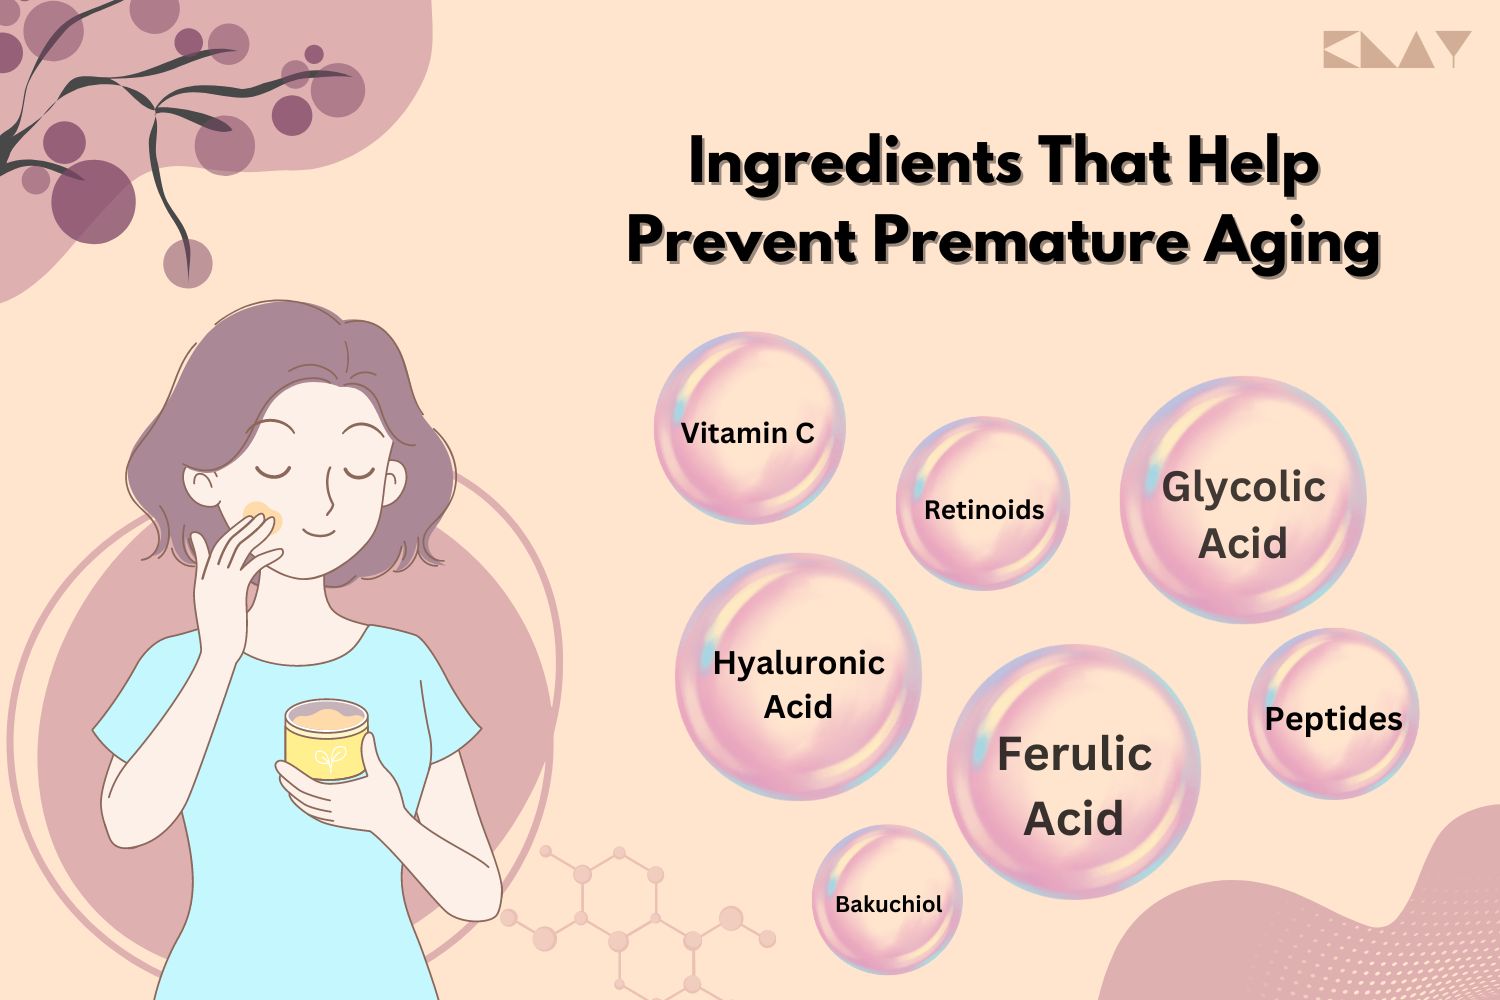 Ingredients that help in premature aging